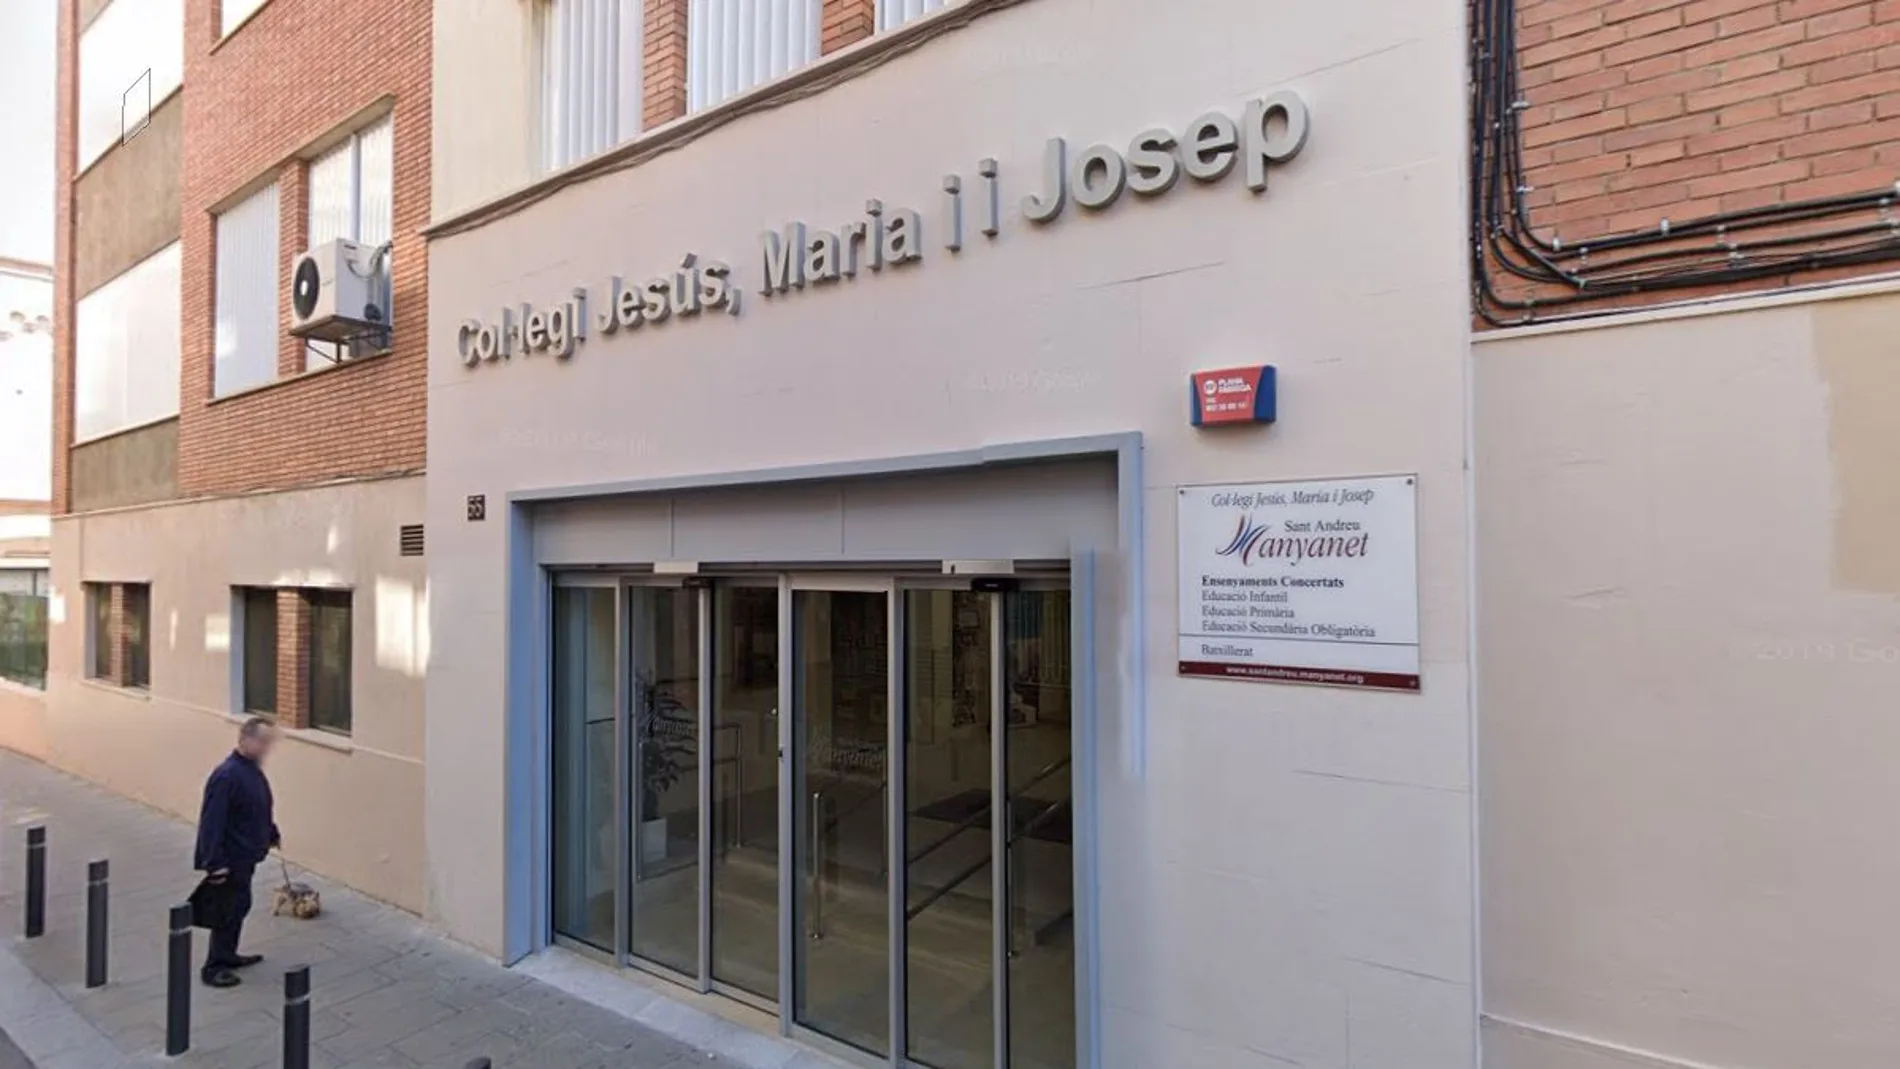 Colegio Jesús, Maria i Josep de Barcelona